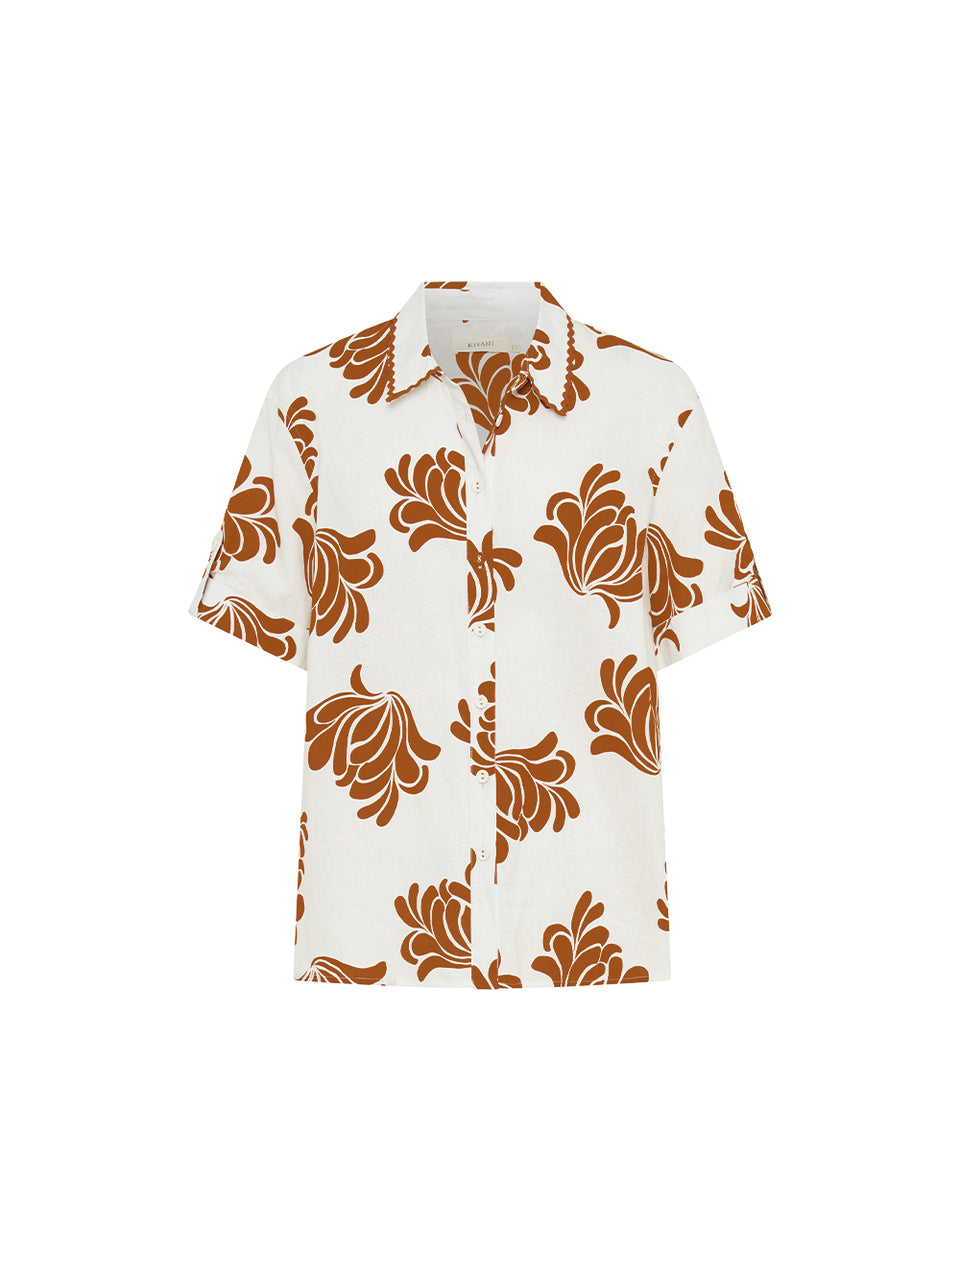 Inza Shirt KIVARI | Ivory and brown shirt